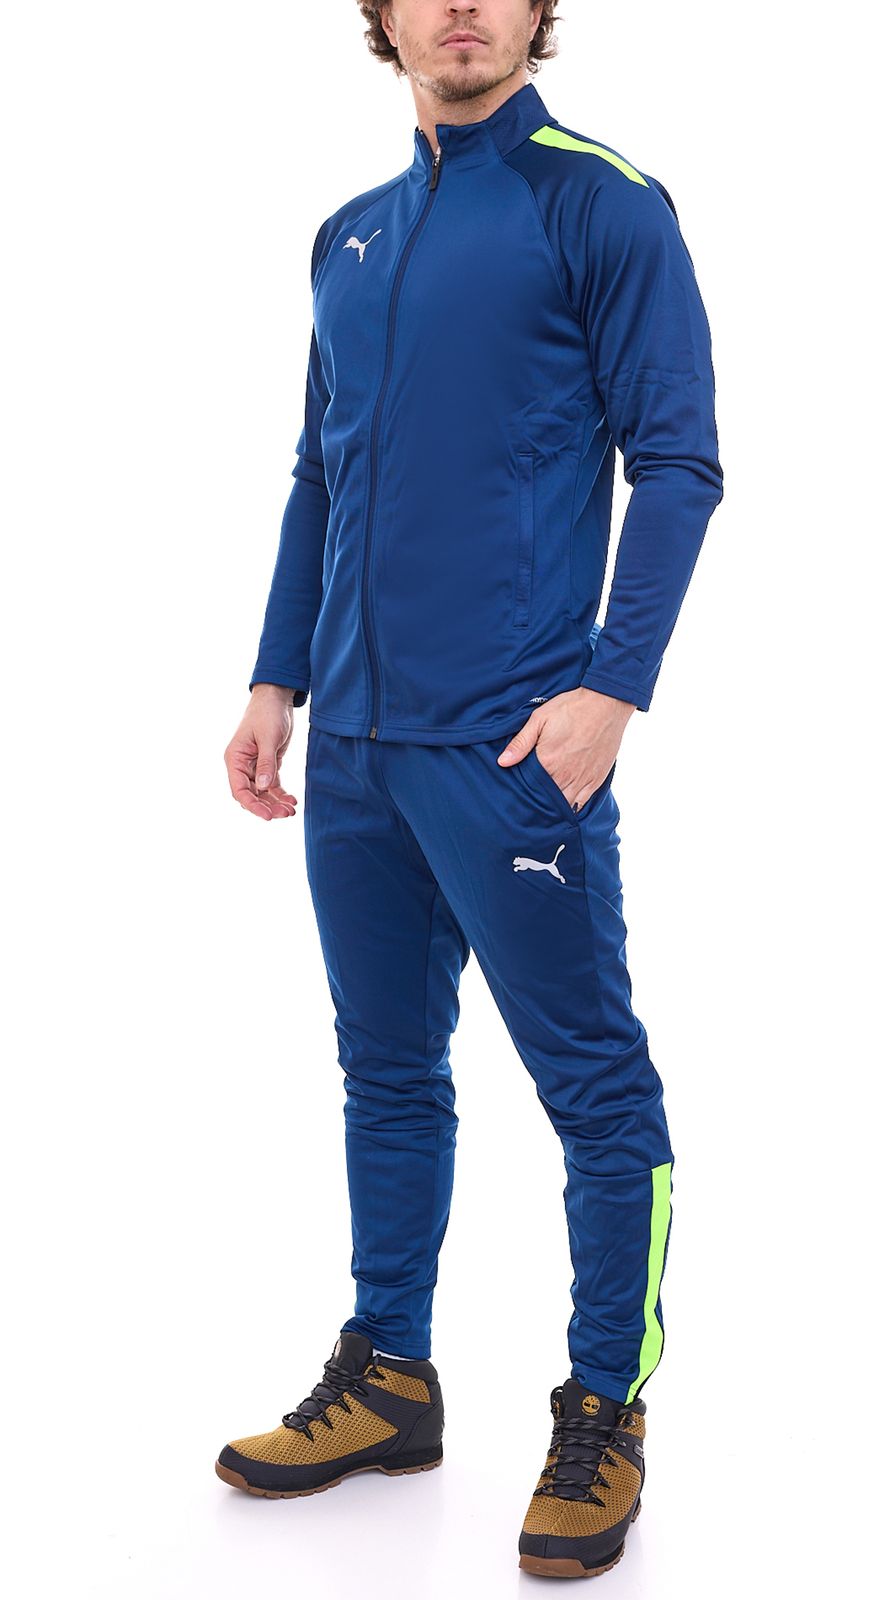 PUMA Teamliga Herren Trainings-Anzug trendiger Sport-Anzug mit dryCELL-Technologie 658525 54 Blau/Neongrün von PUMA